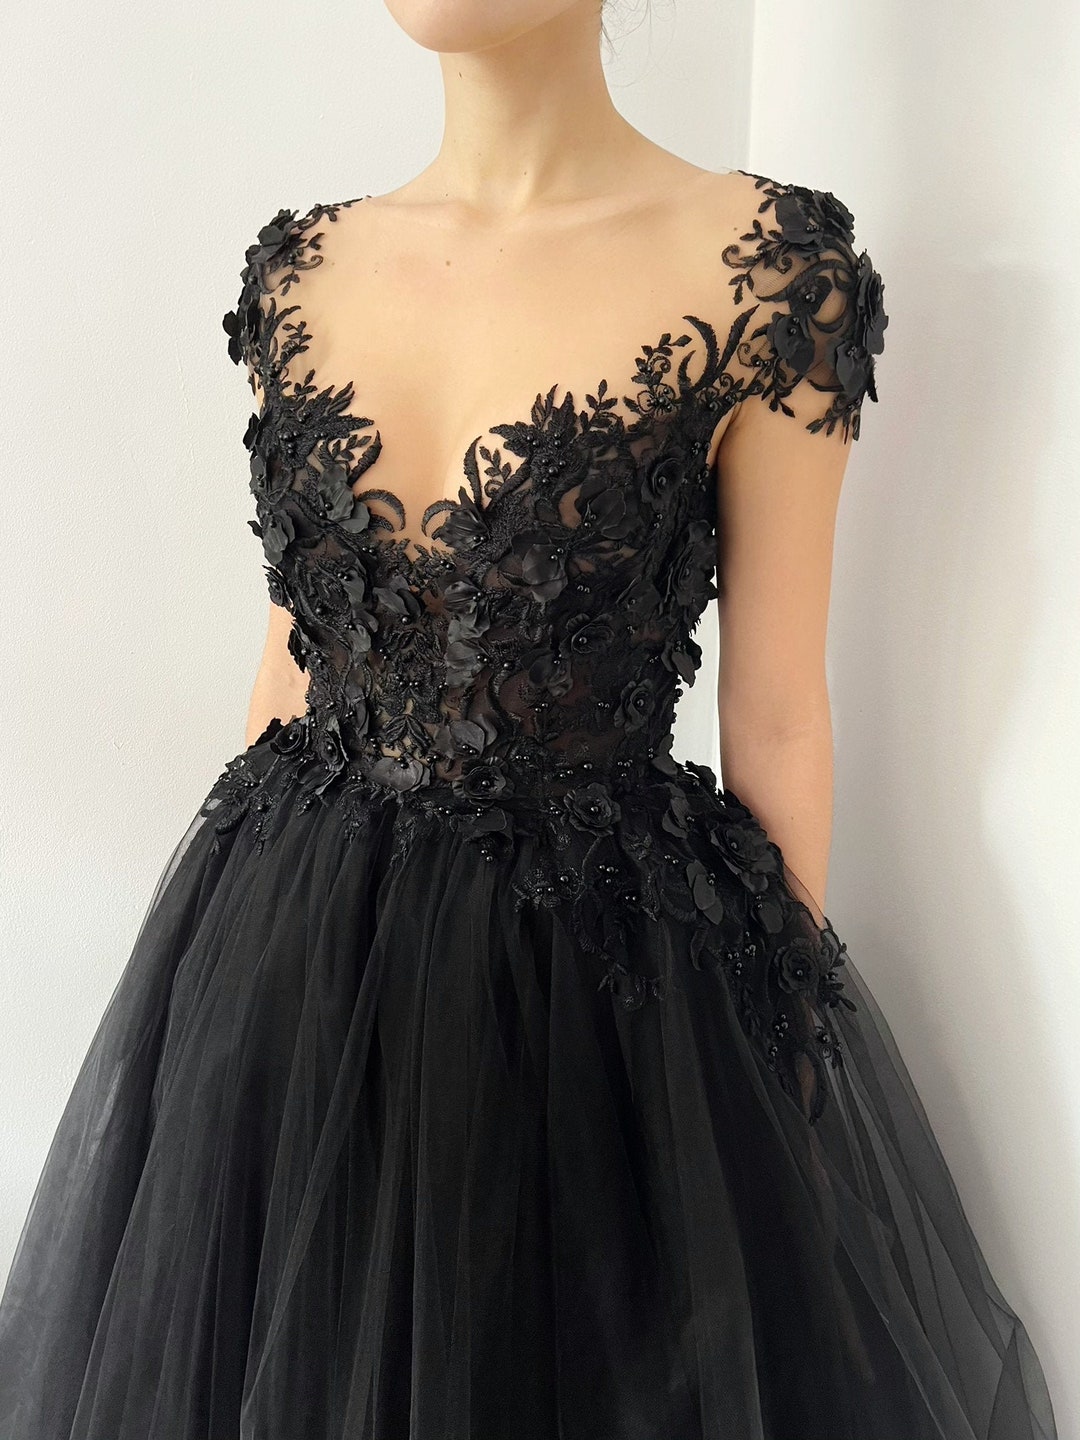 Black Gothic 3D Beaded Floral Lace Applique Tulle Dress - Etsy